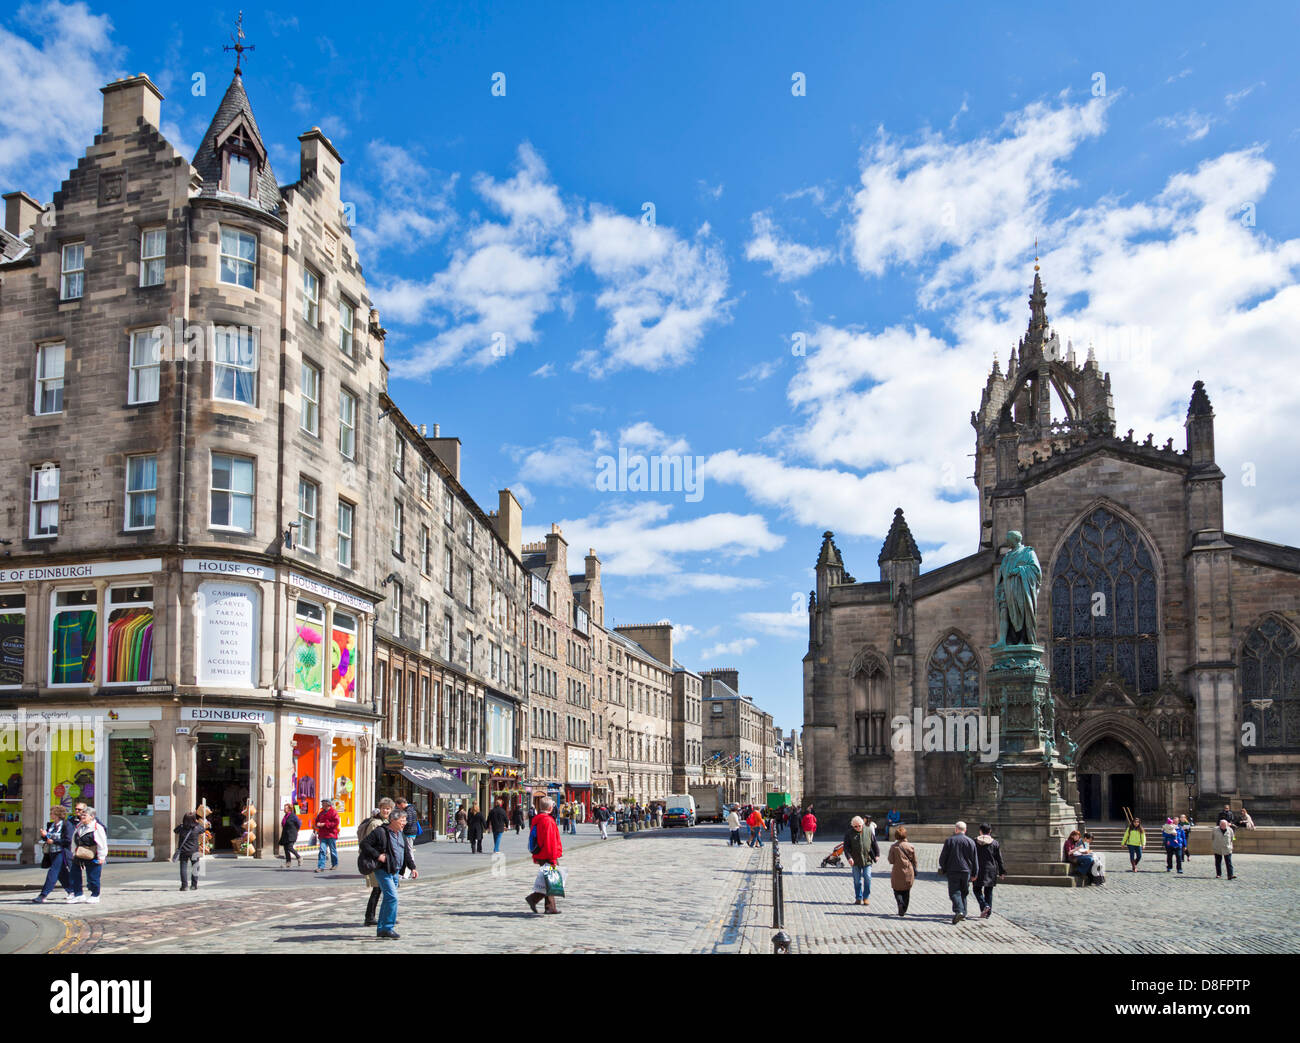 St Giles cathedral High Street Edinburgh royal Mile Midlothian Scotland UK GB EU Europe Stock Photo